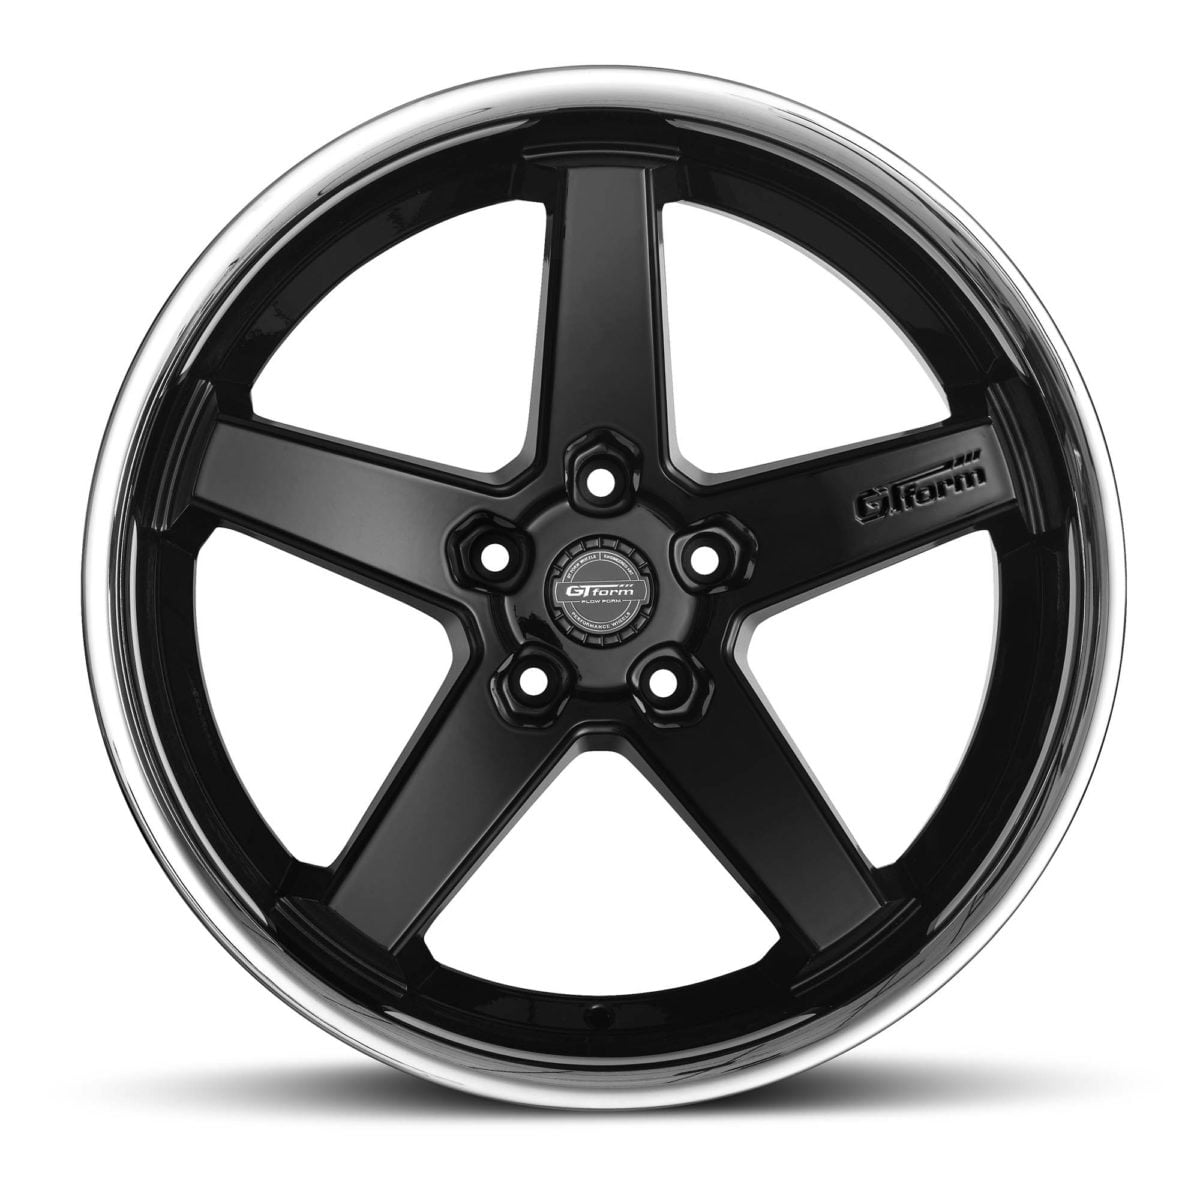 Car Rims GT Form Legacy gloss black chrome lip wheels